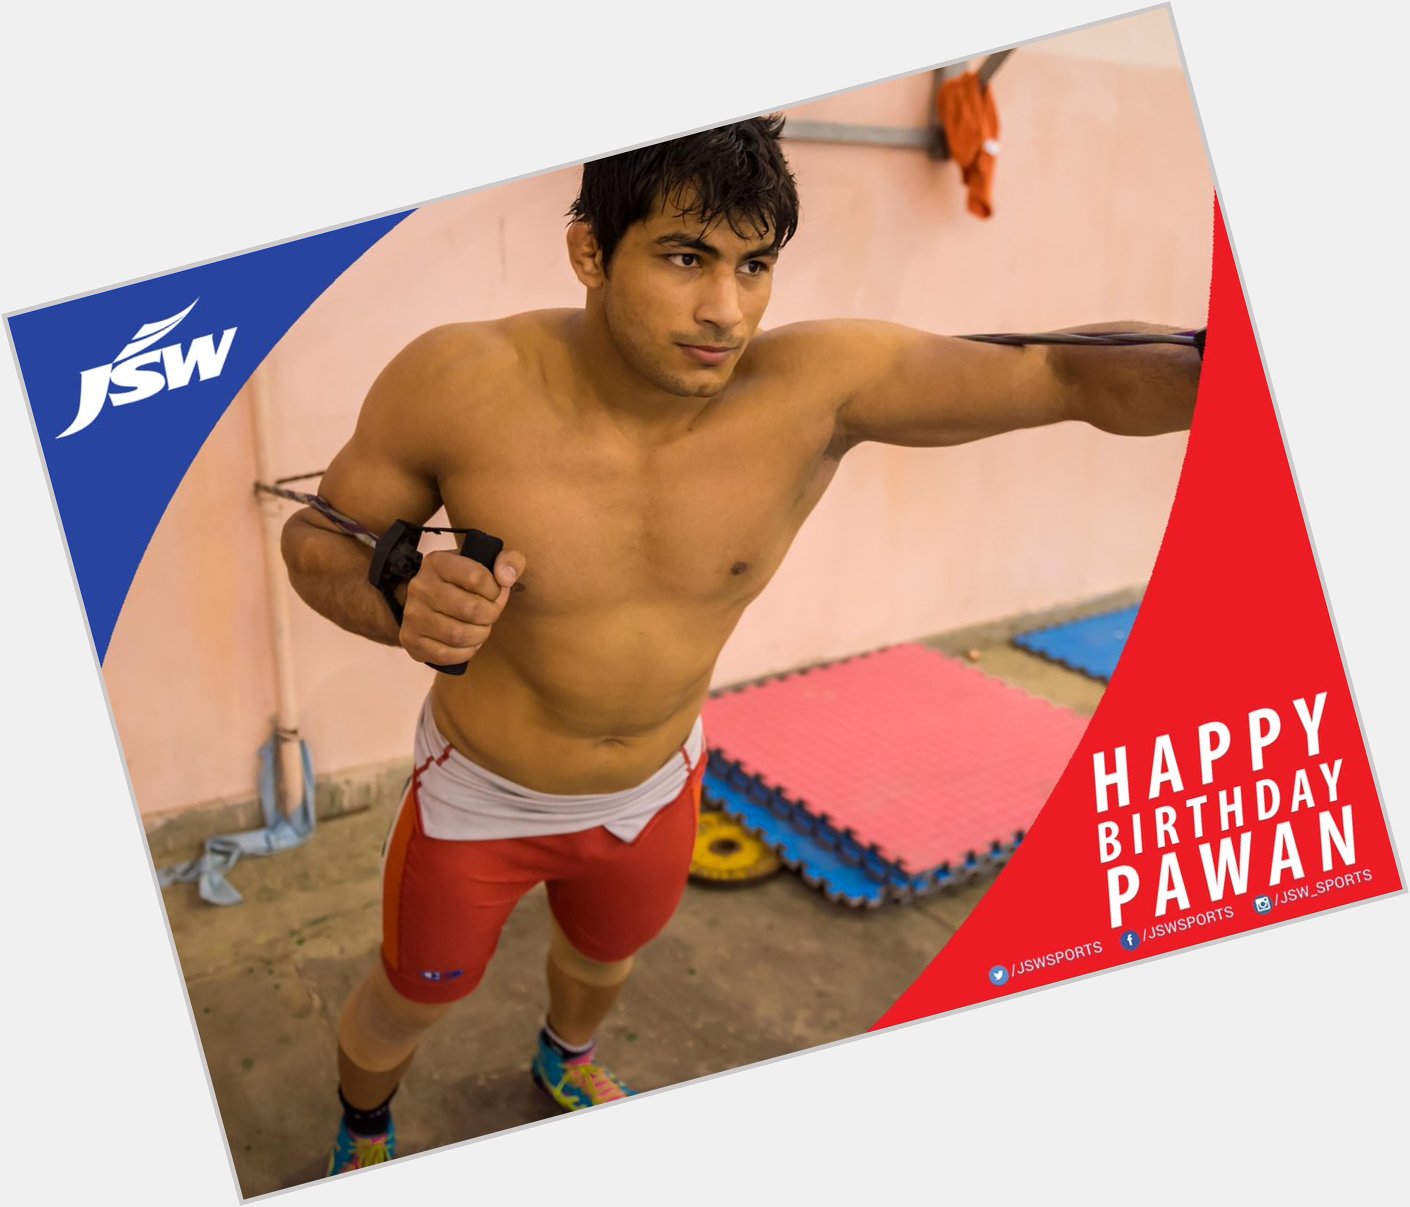  wishes 86-kg 2014 Commonwealth Games bronze medal winning wrestler Pawan Kumar a very Happy Birthday! 